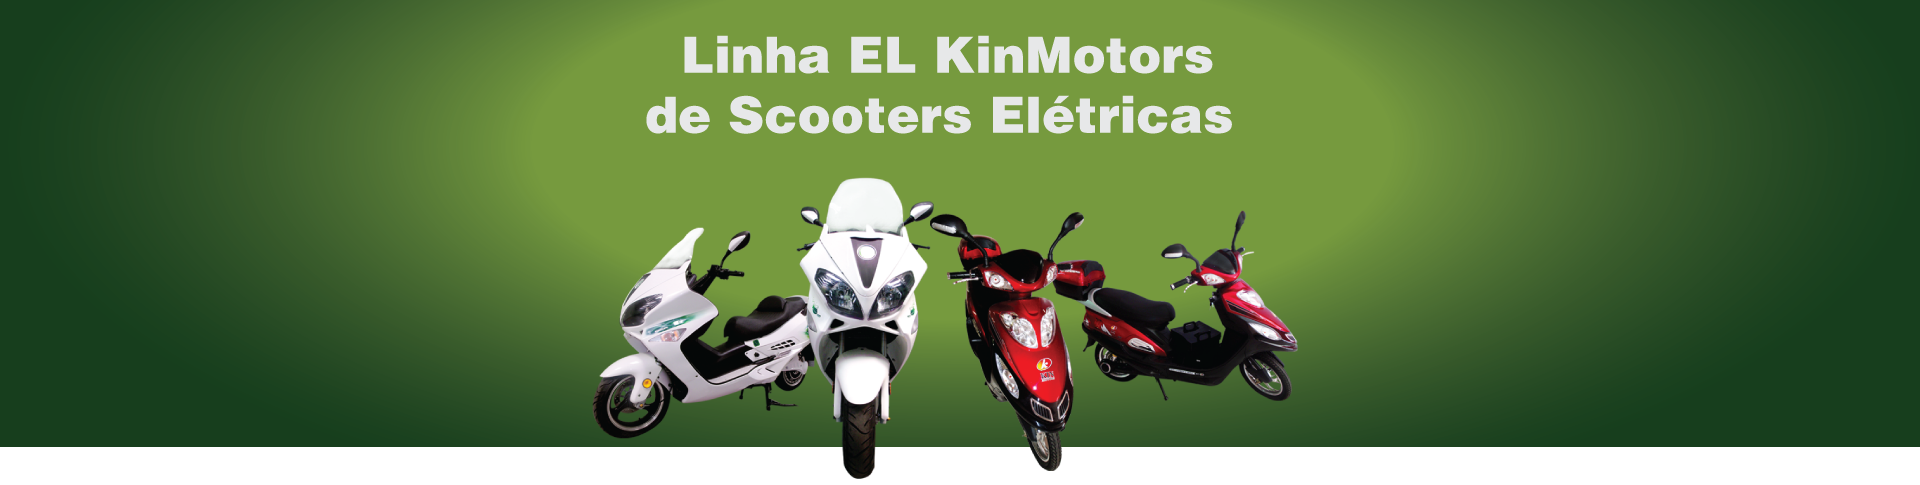 Scooter elétricas kin motors slide 1